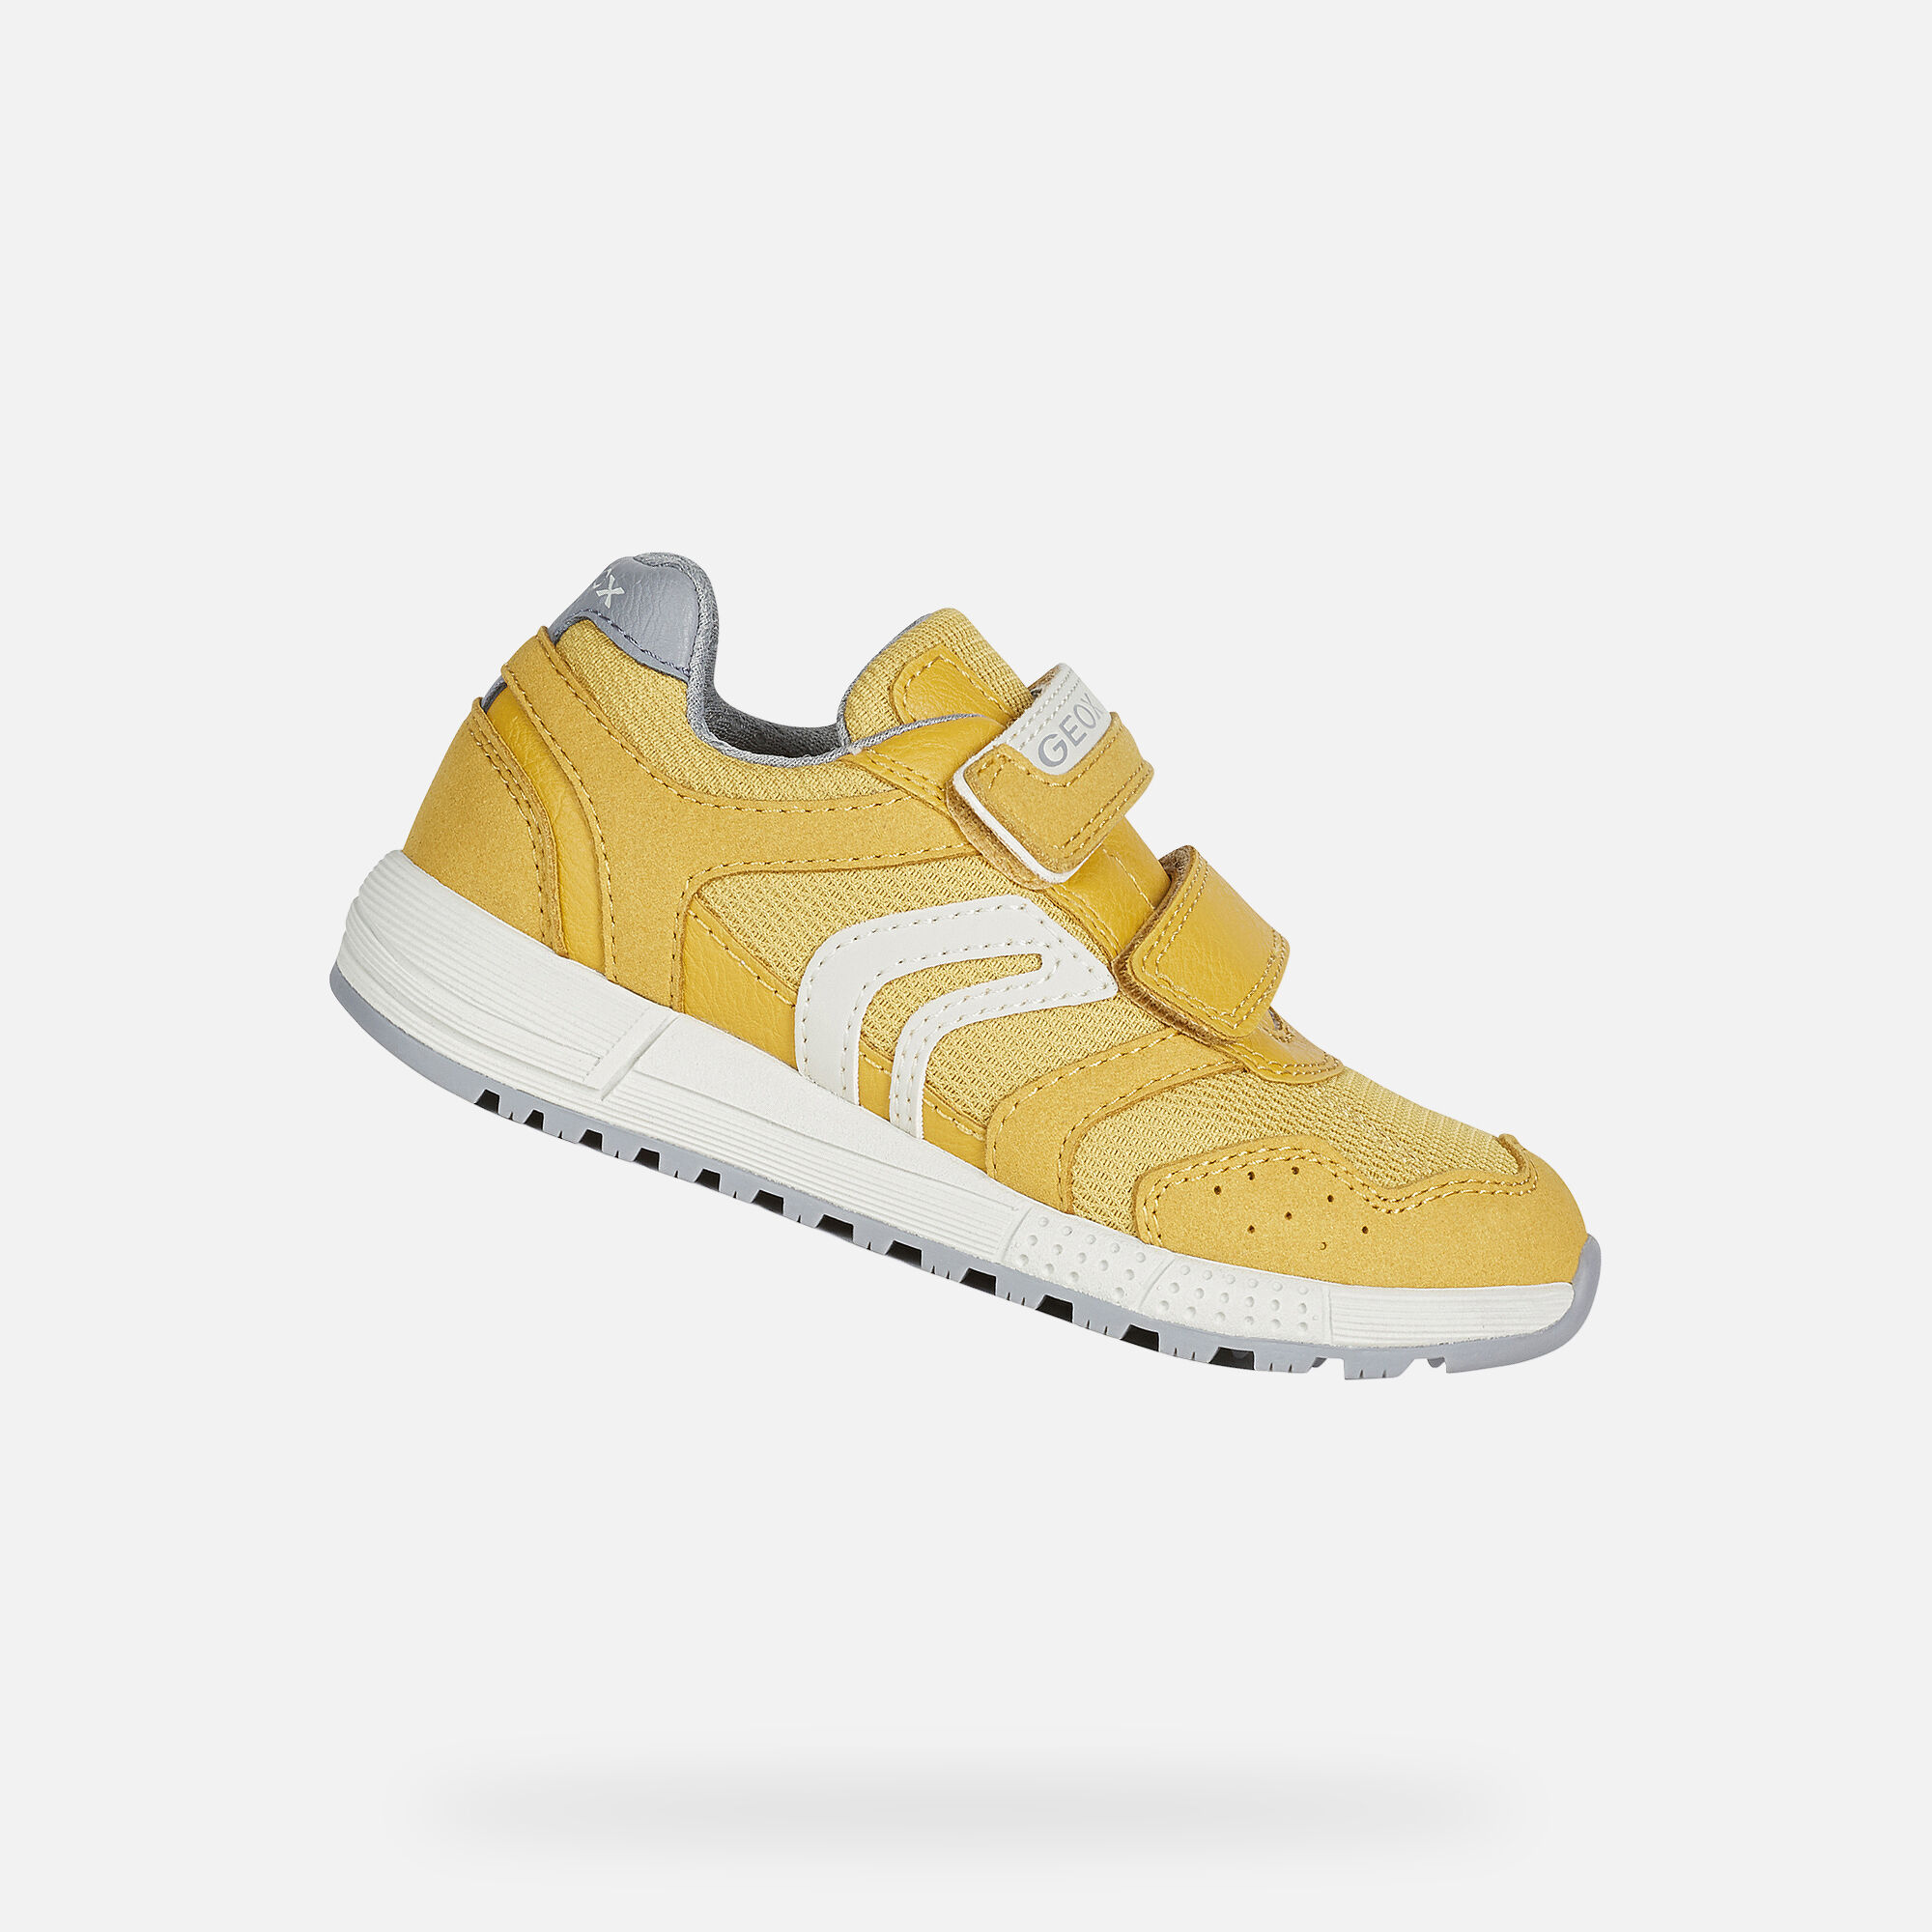 dark yellow sneakers